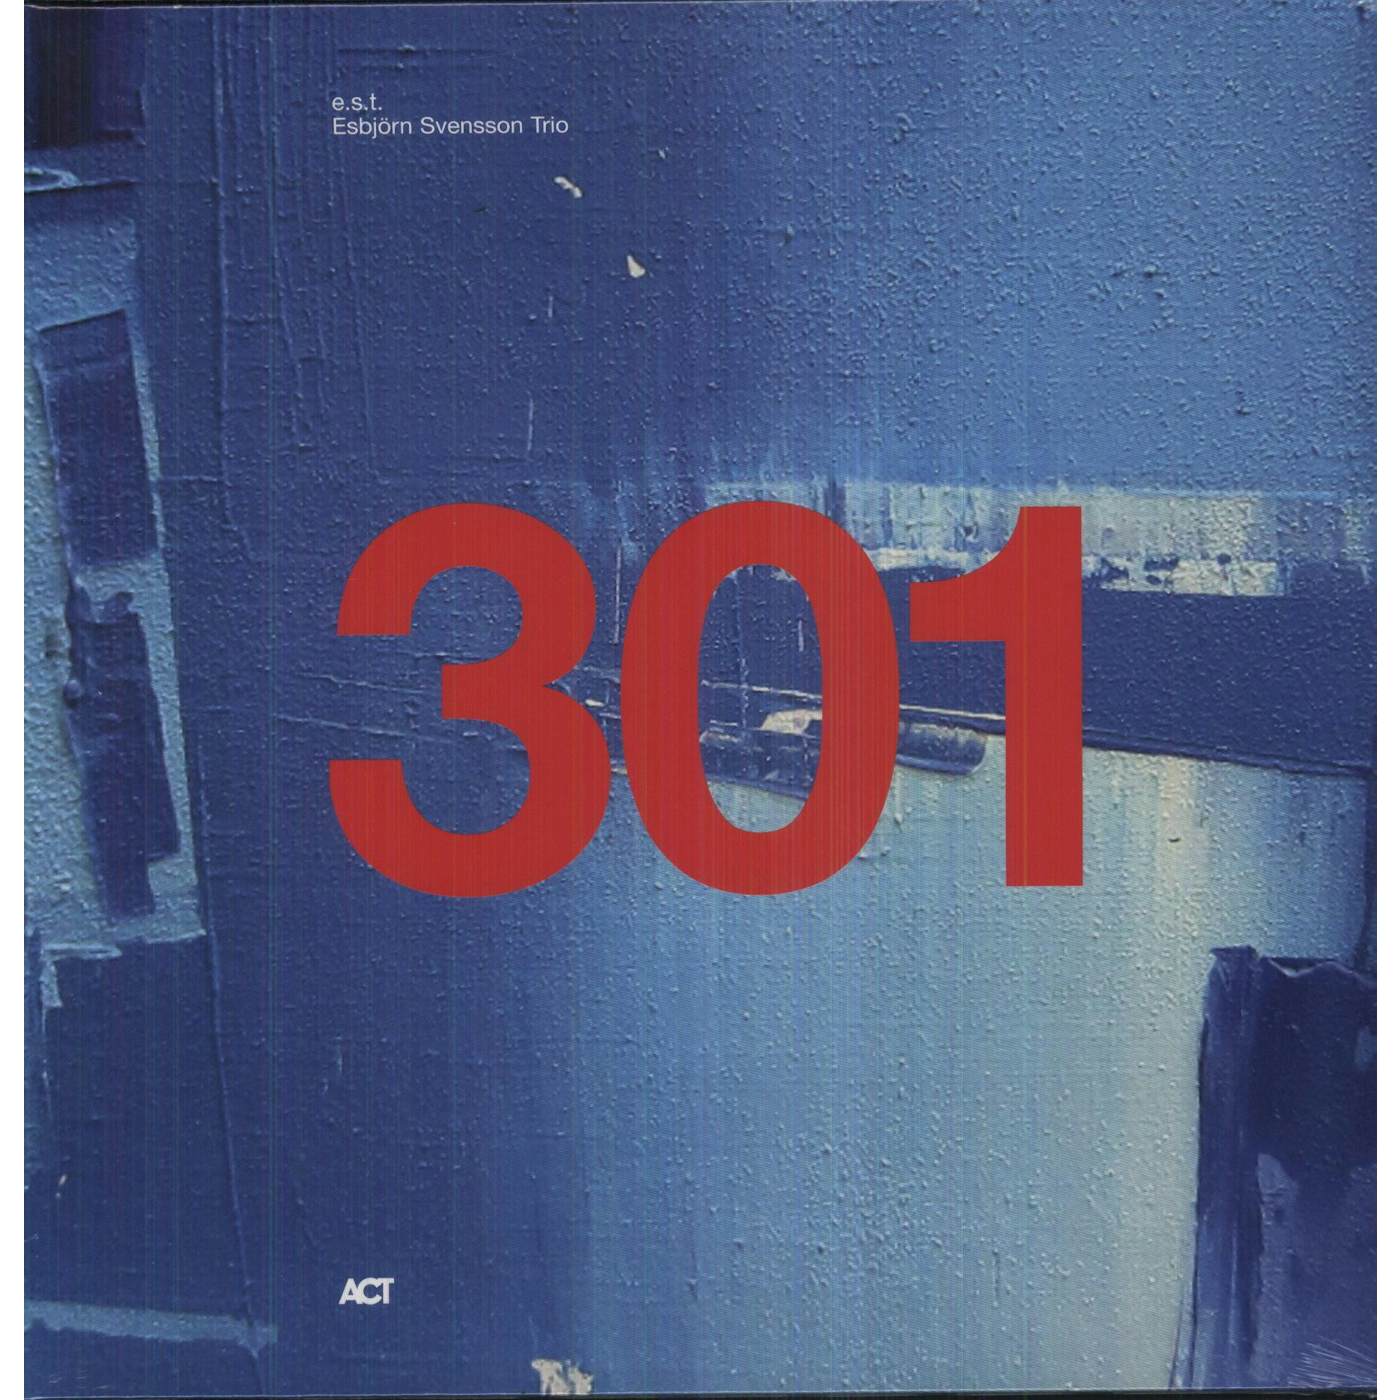 Est ( Esbjorn Svensson Trio ) 301 Vinyl Record